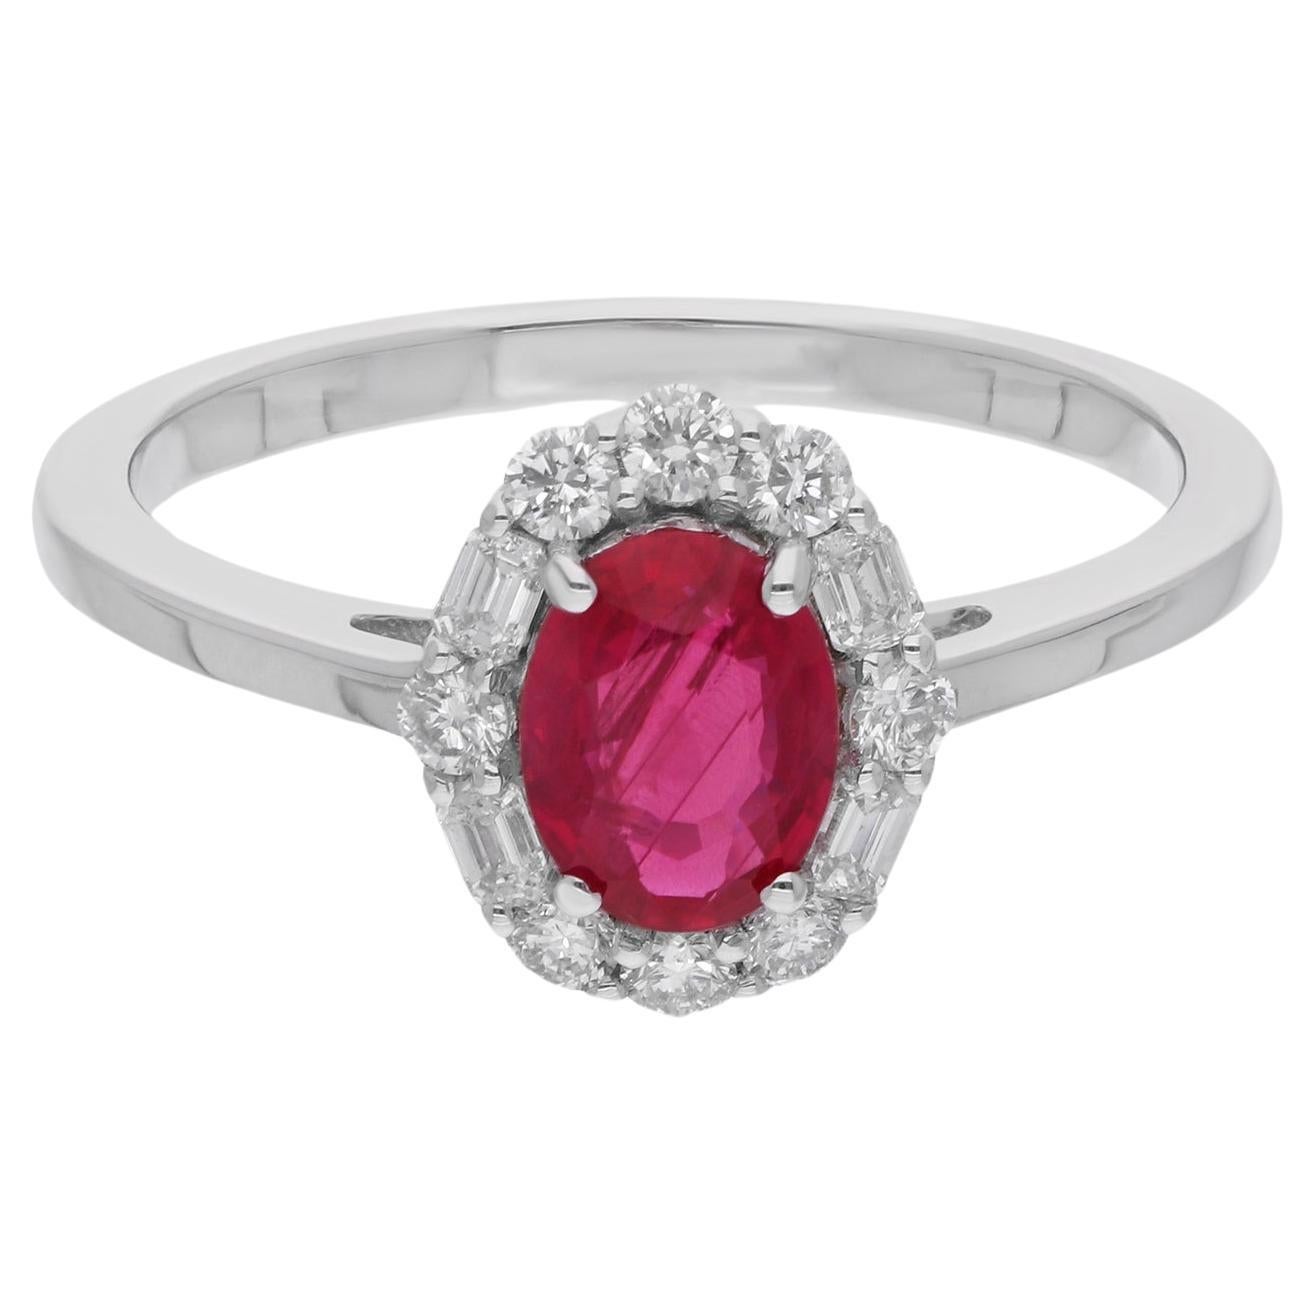 Natural Oval Ruby Gemstone Ring Diamond 18 Karat White Gold Handmade Jewelry For Sale